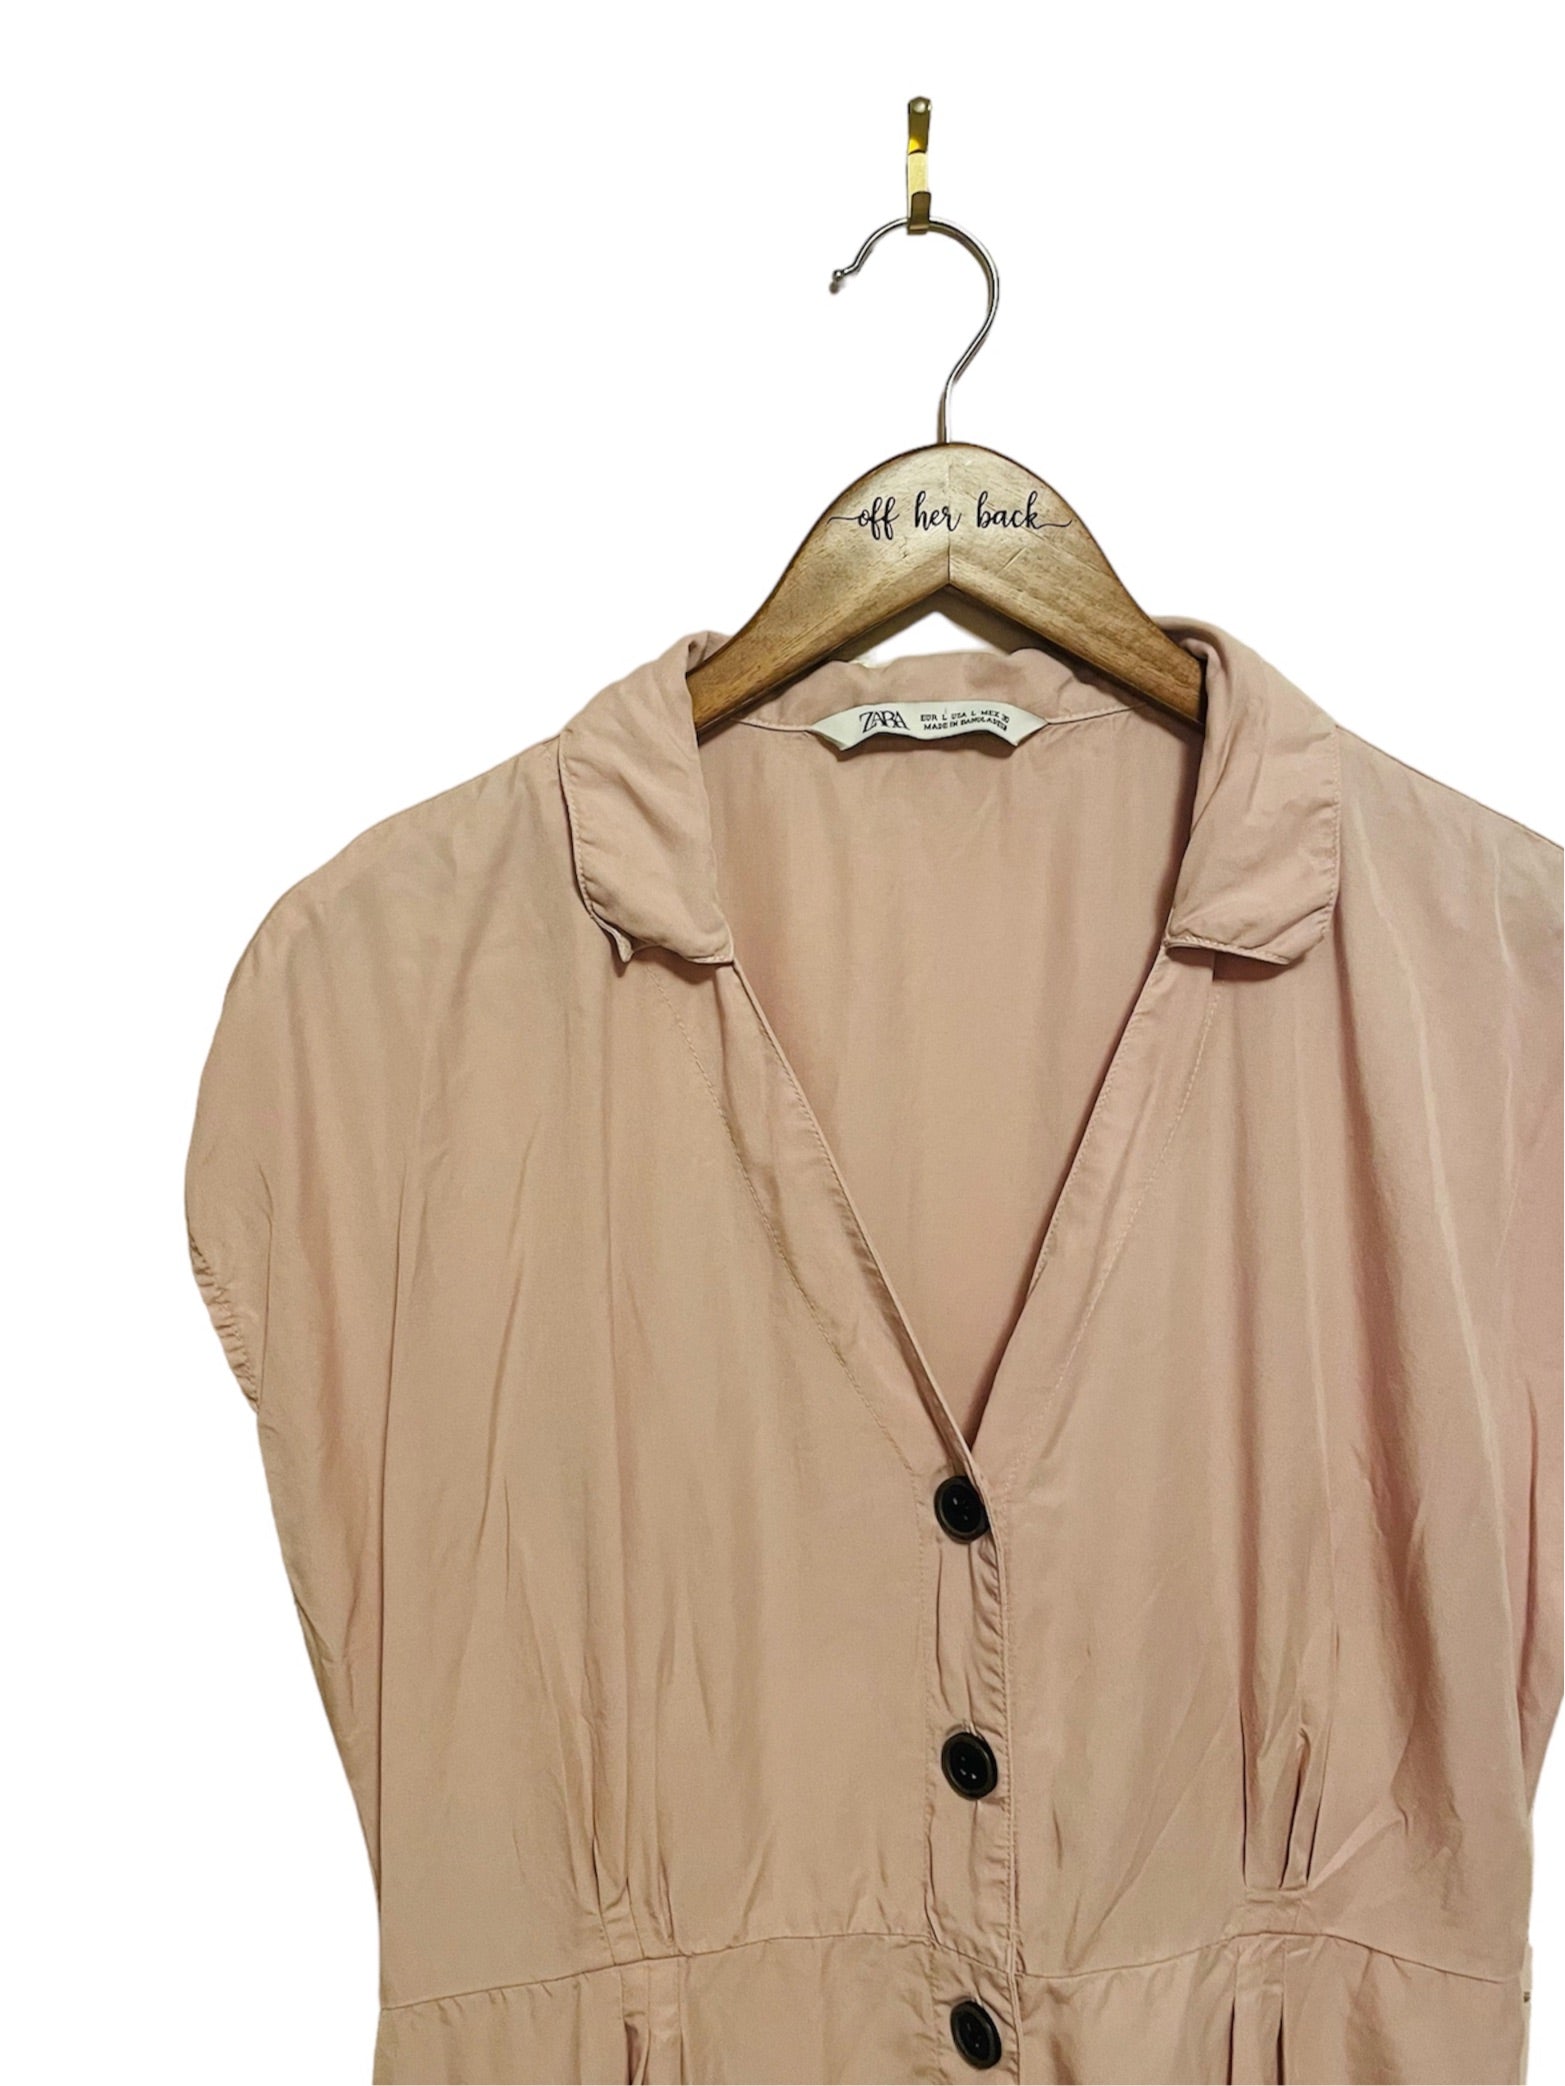 Zara Button Down Tunic Dress Size: Large